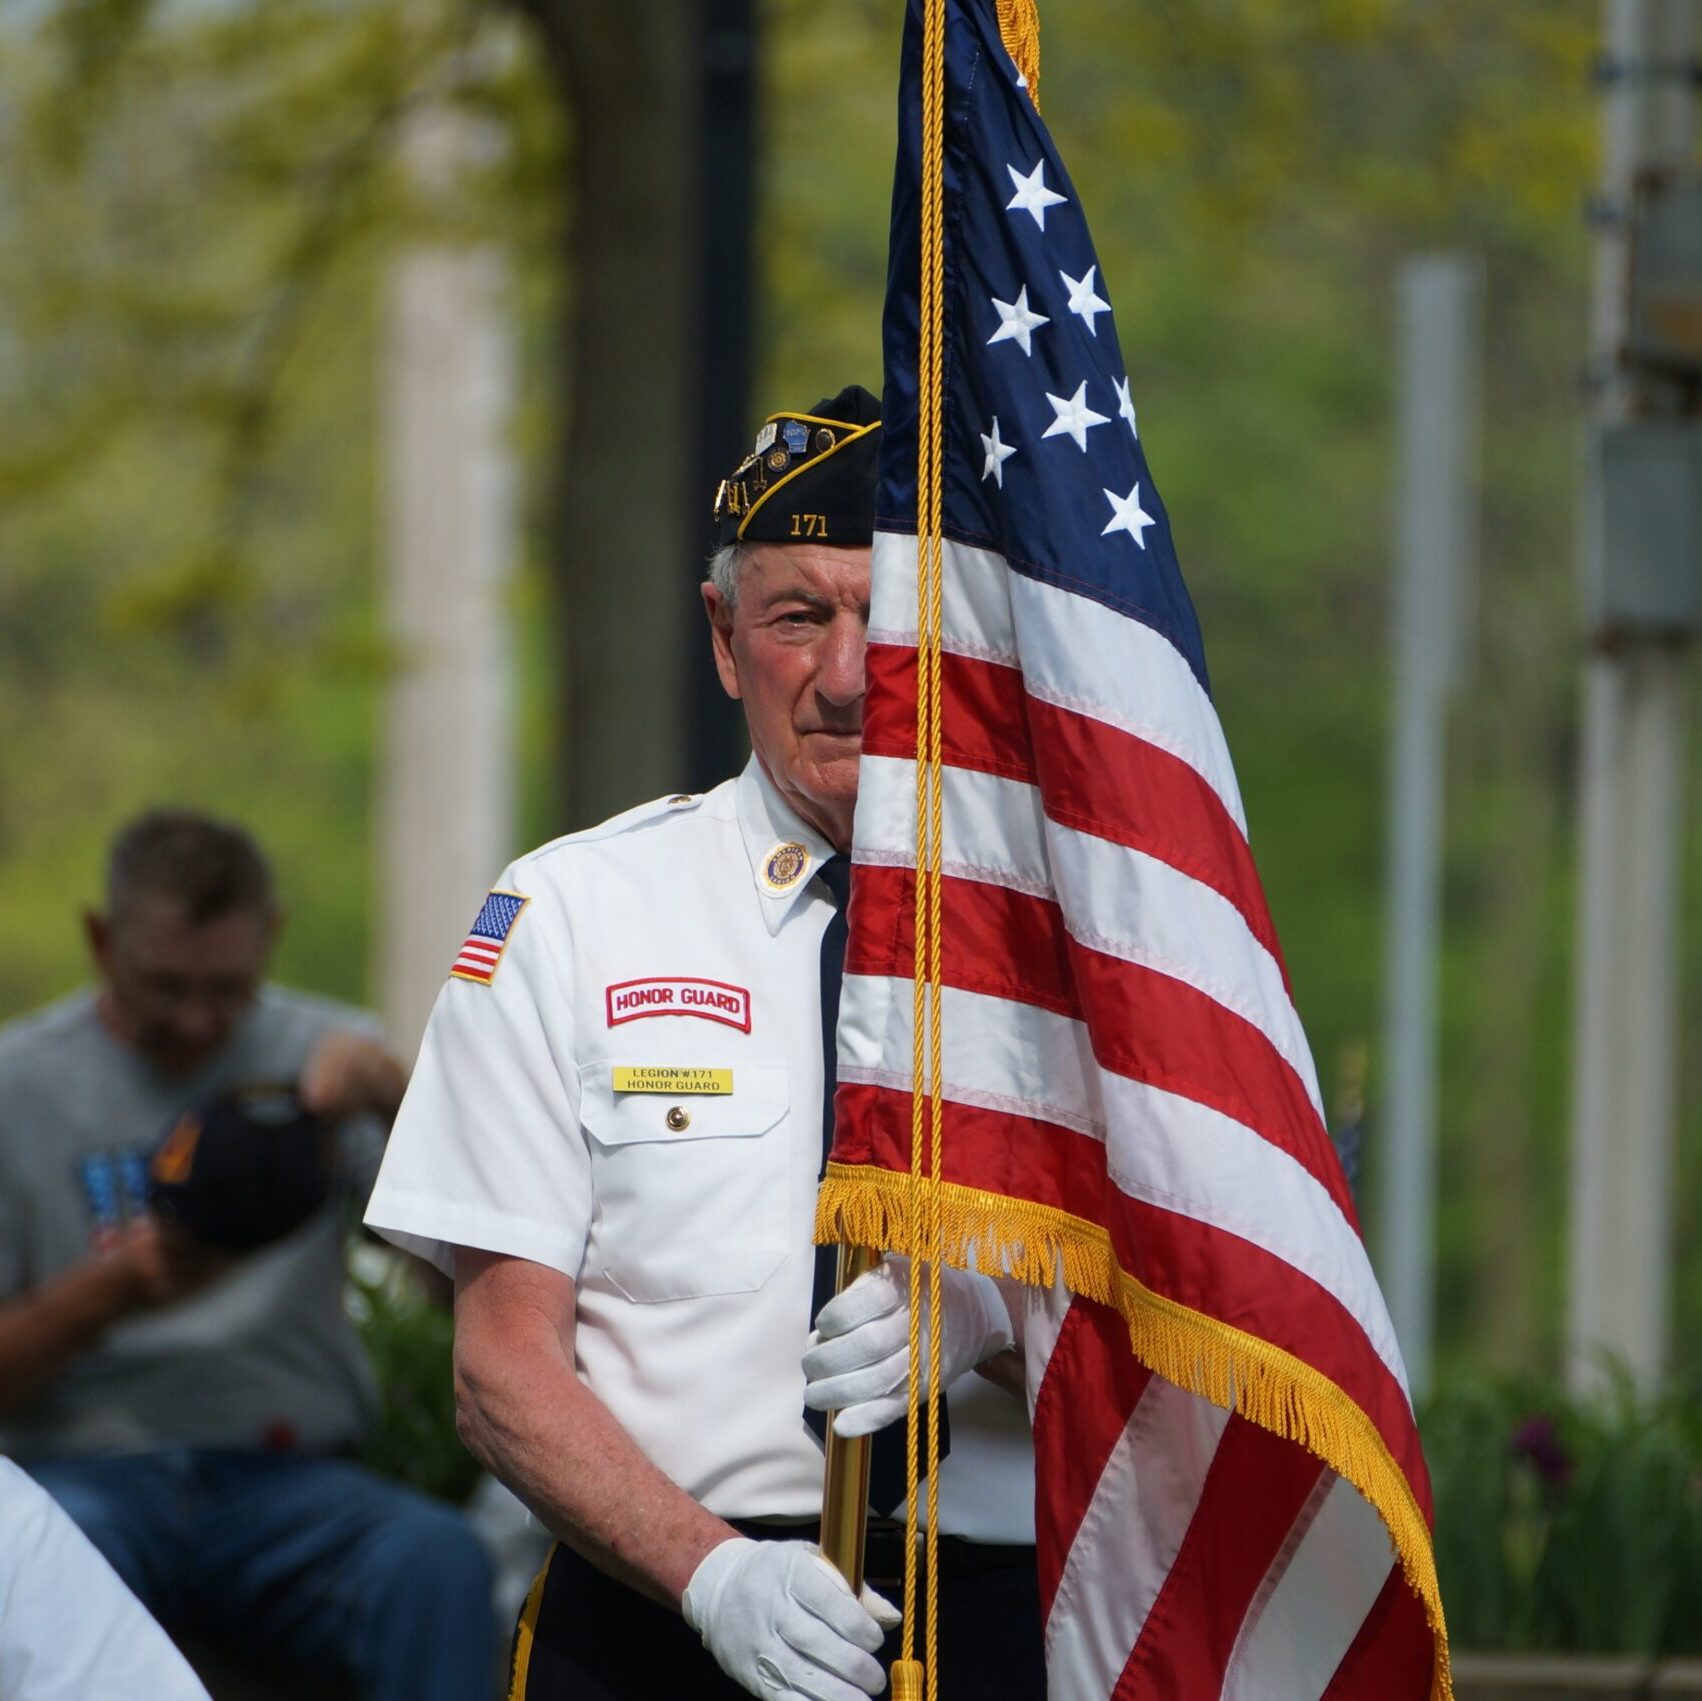 Celebrating Veterans + Life